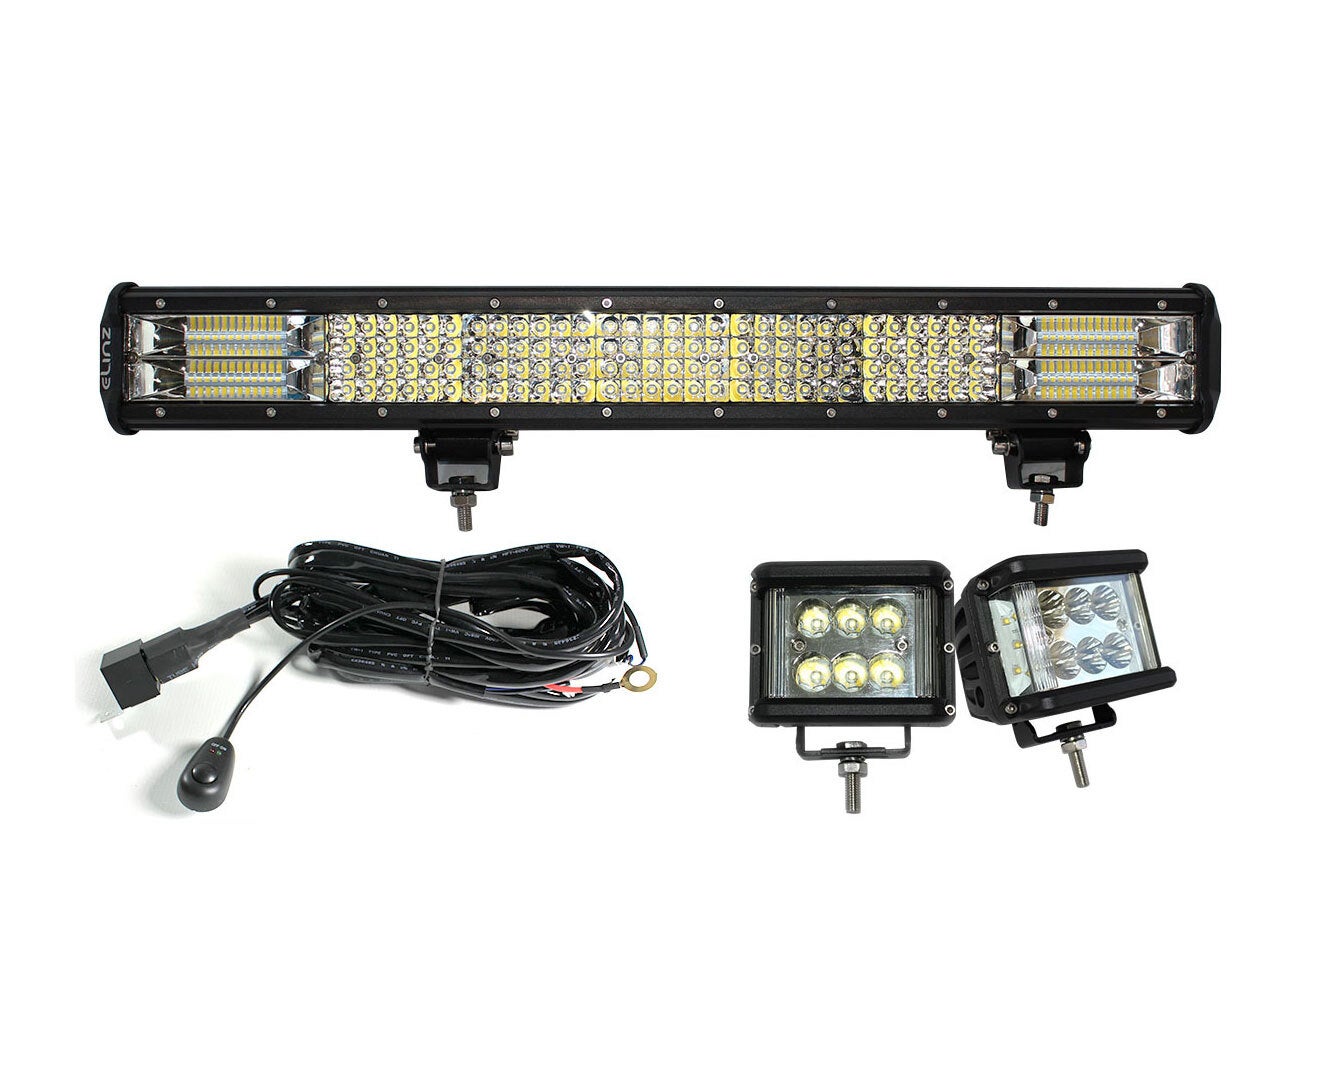 Elinz 23" LED Light Bar Philips 4 Rows Bundle 2x 60W Driving WorkLight Flood Spot Beam